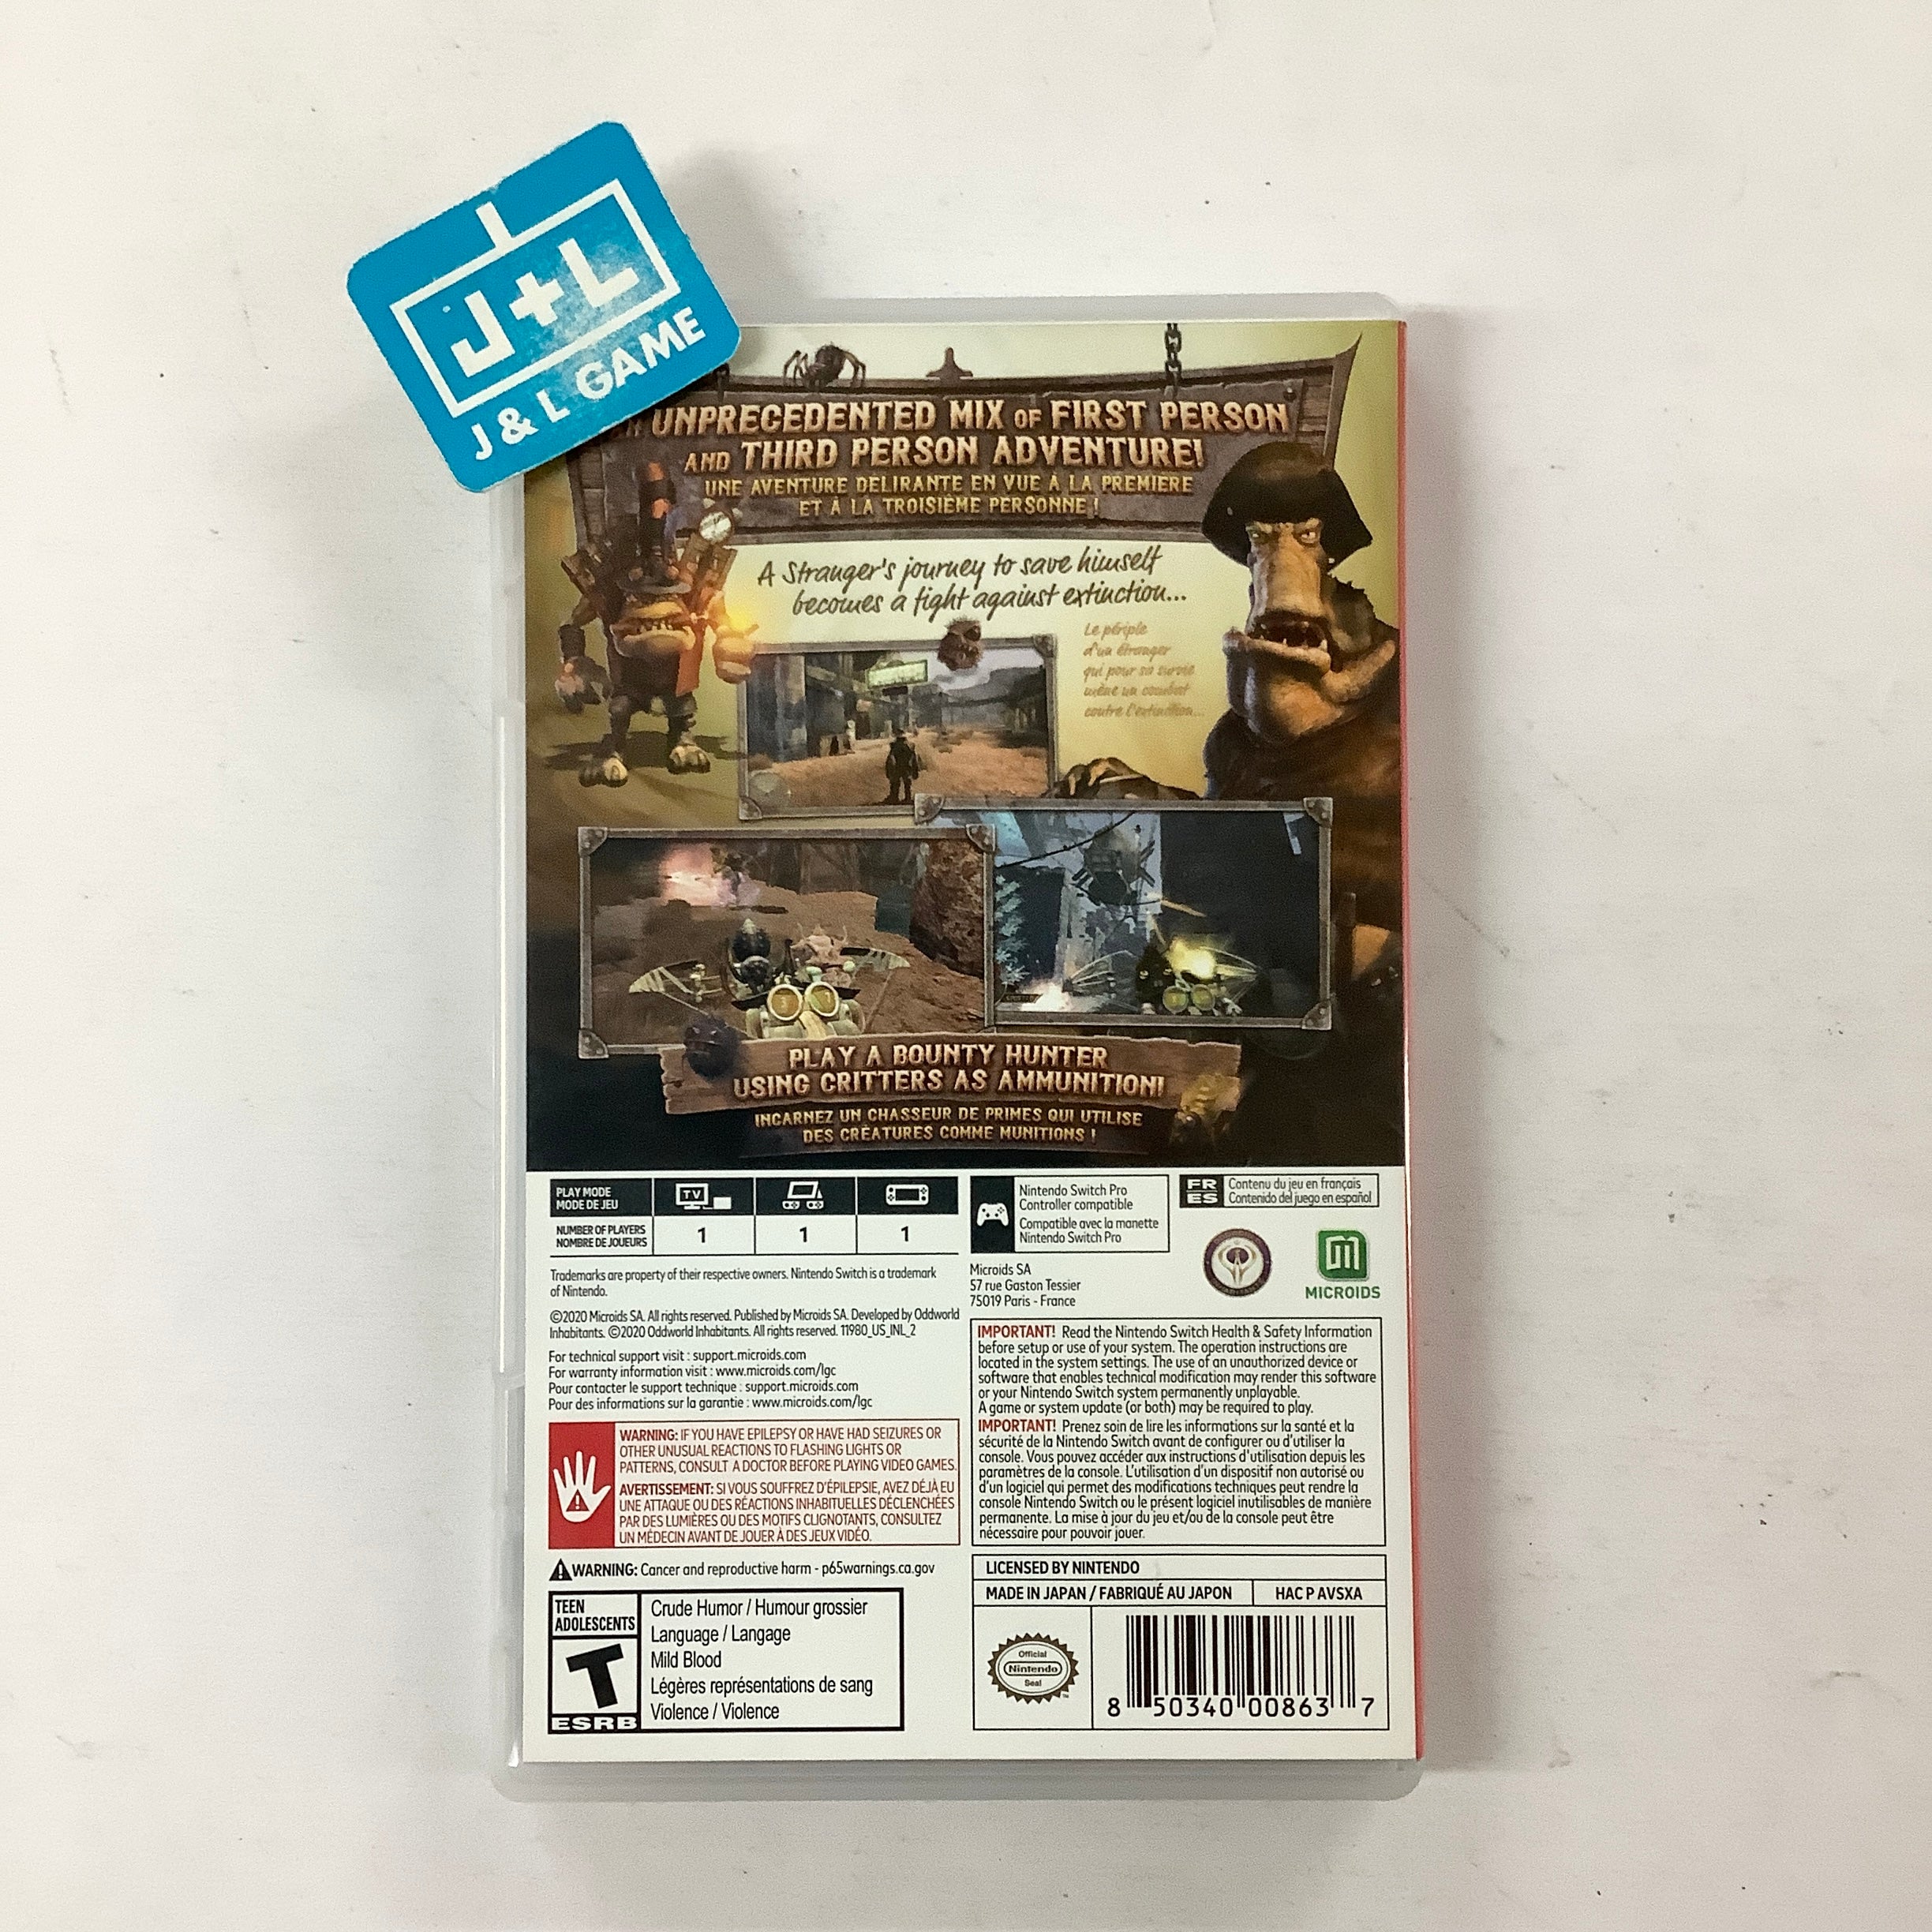 Oddworld: Stranger's Wrath  - (NSW) Nintendo Switch [UNBOXING] Video Games Maximum Games   